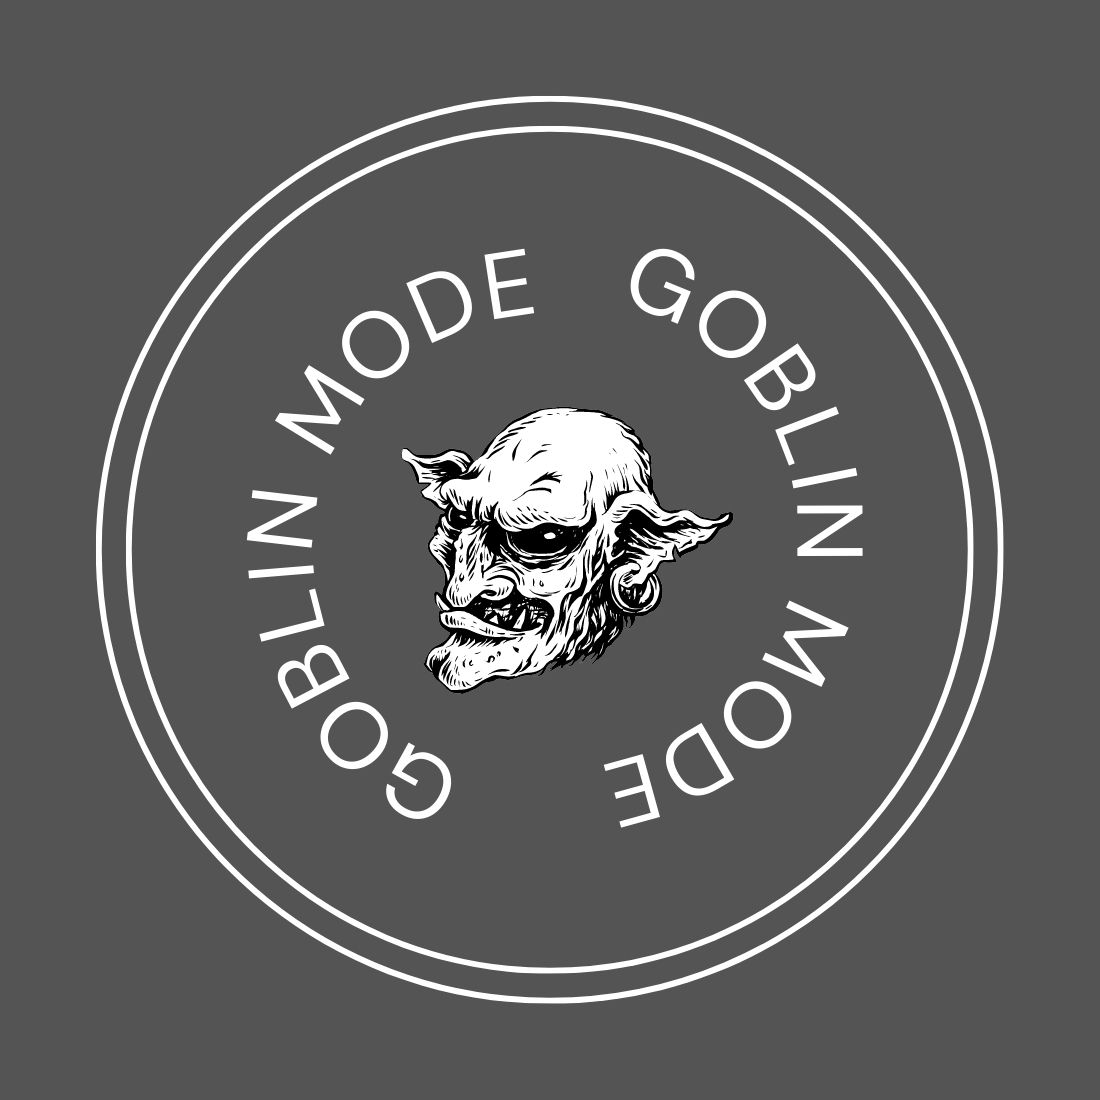 Goblin Mode cover image.